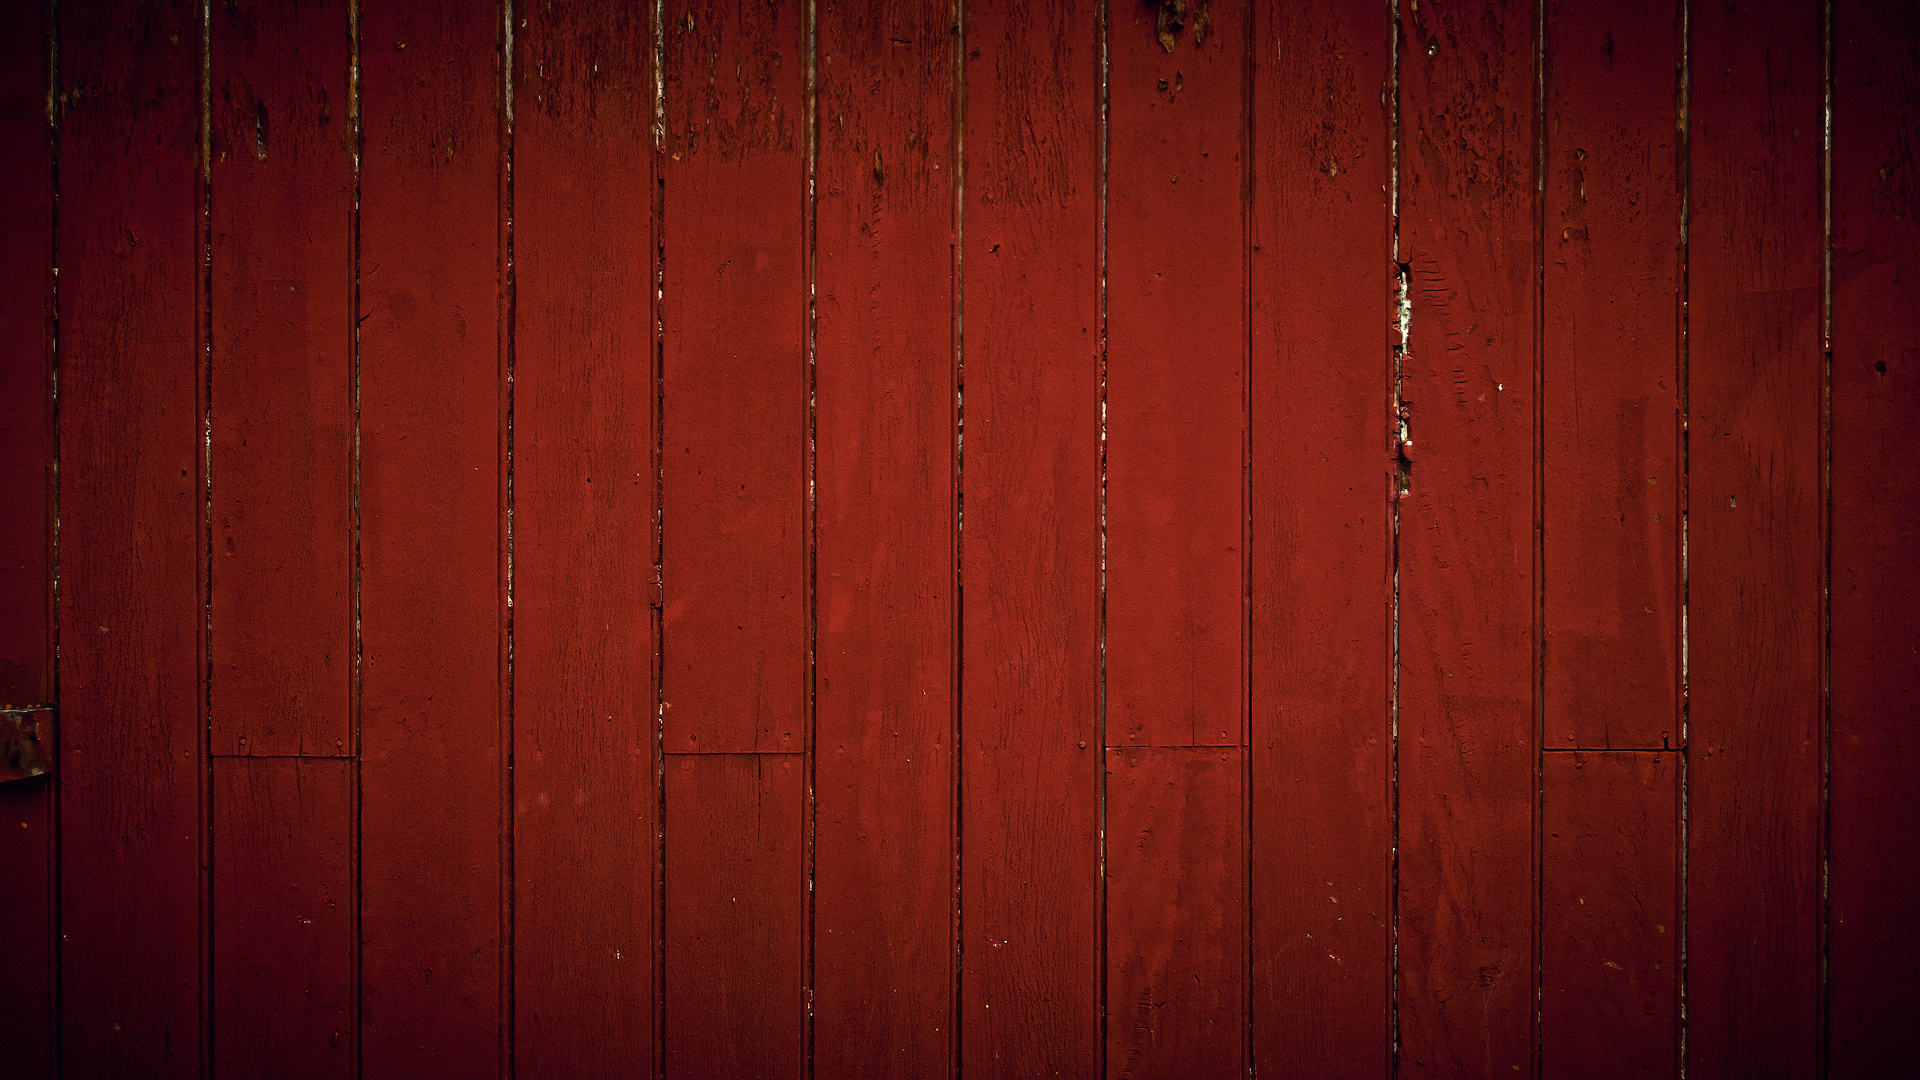  Wood  HD Wallpaper Background  Image 1920x1080  ID 